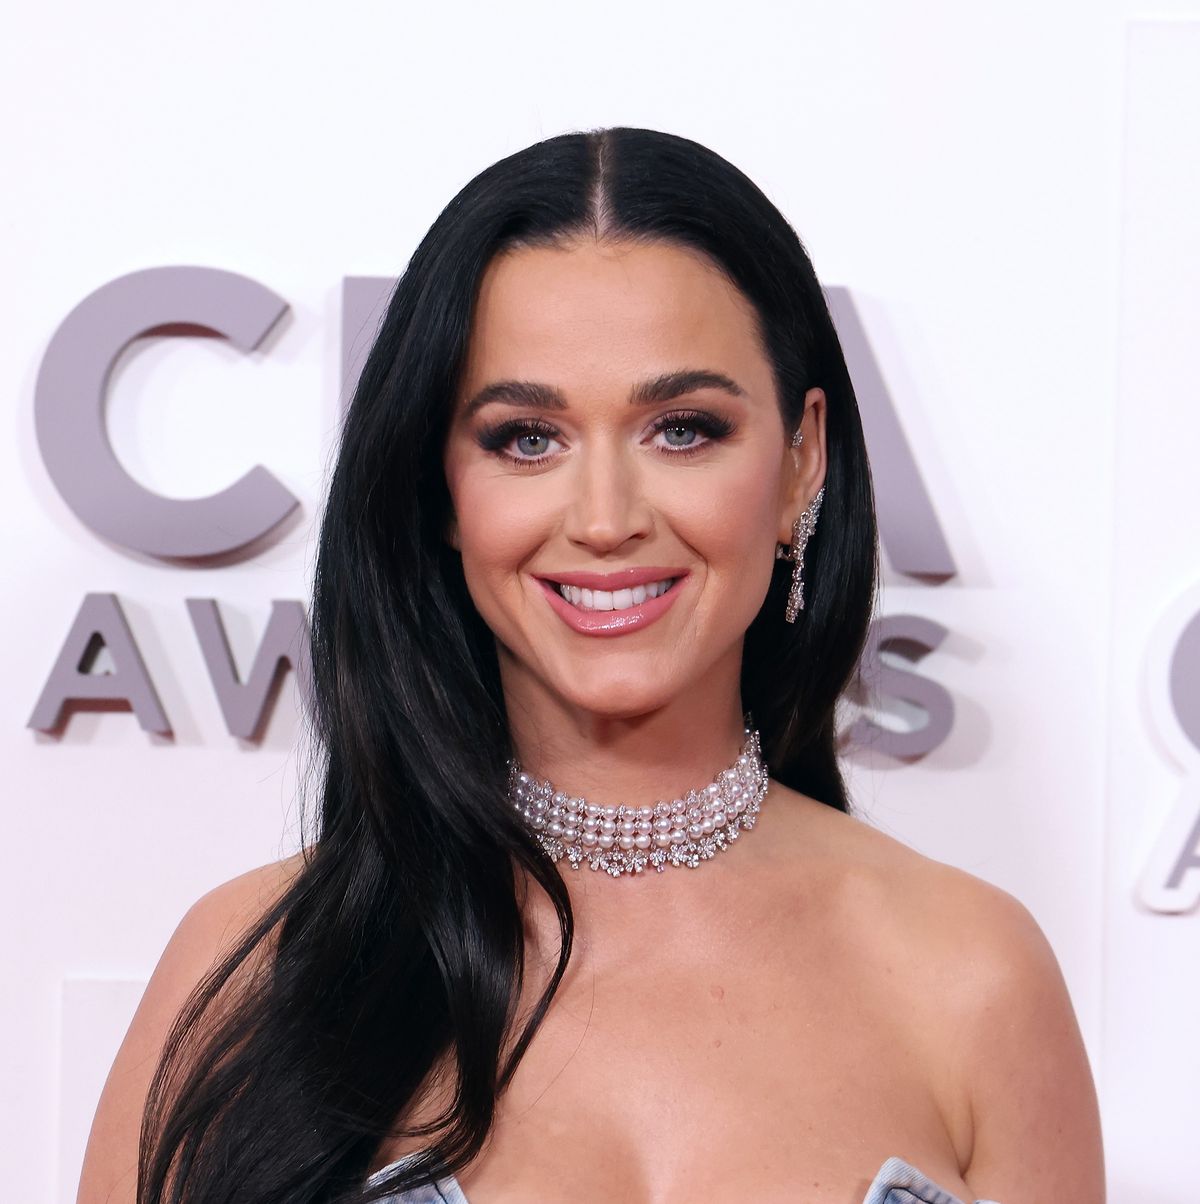 Katy Perry Sex Videos - Katy Perry's sleek hair illusion looks just like a 'Posh bob' cut